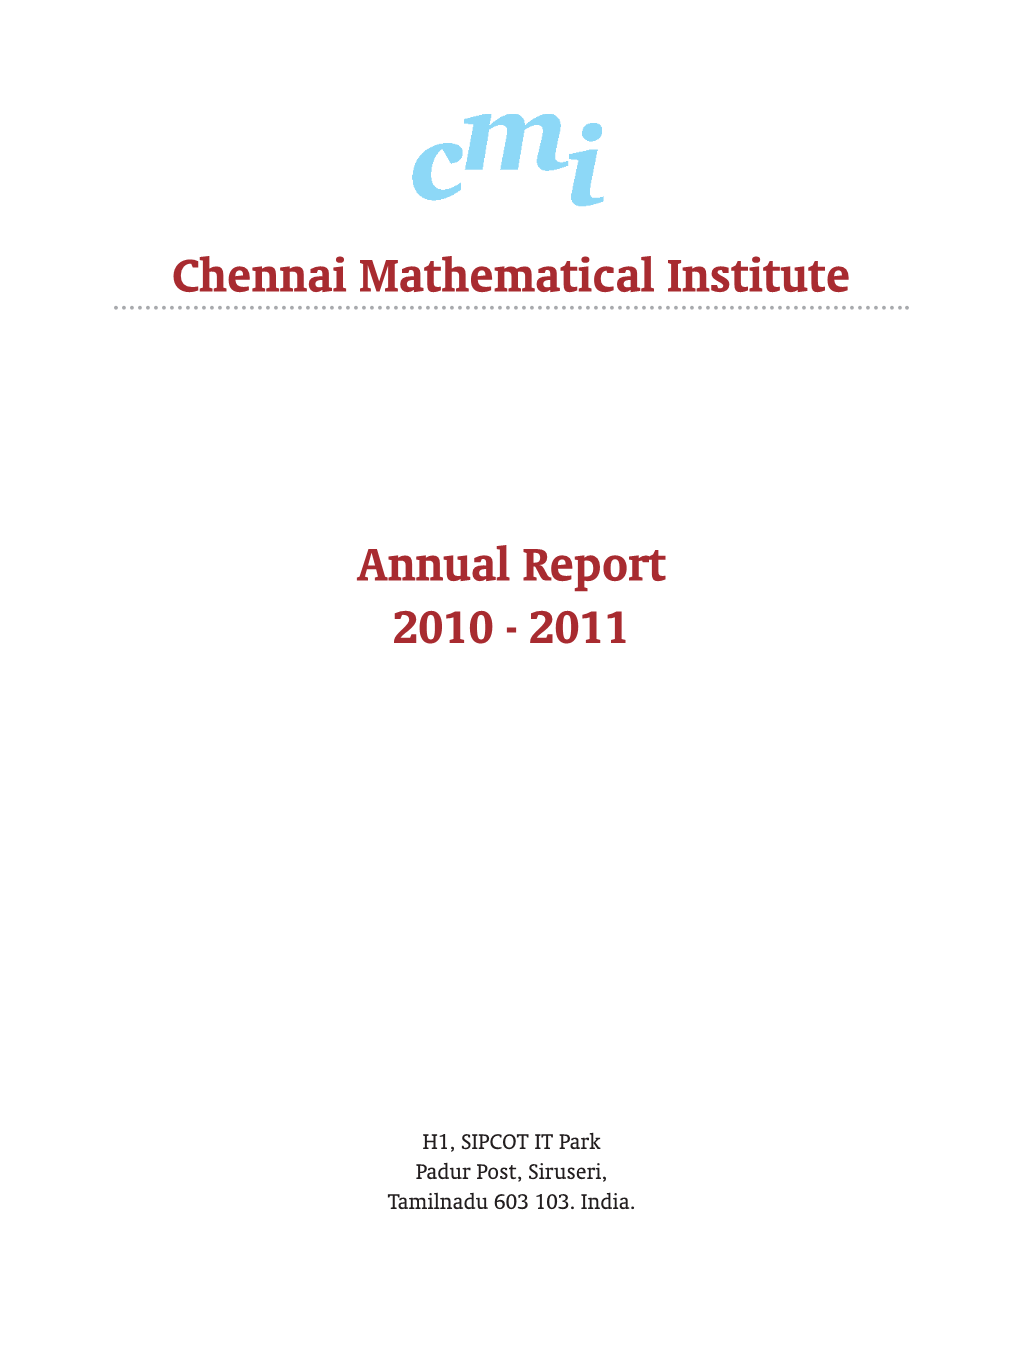 Chennai Mathematical Institute Annual Report 2010 - 2011 69 70 Chennai Mathematical Institute